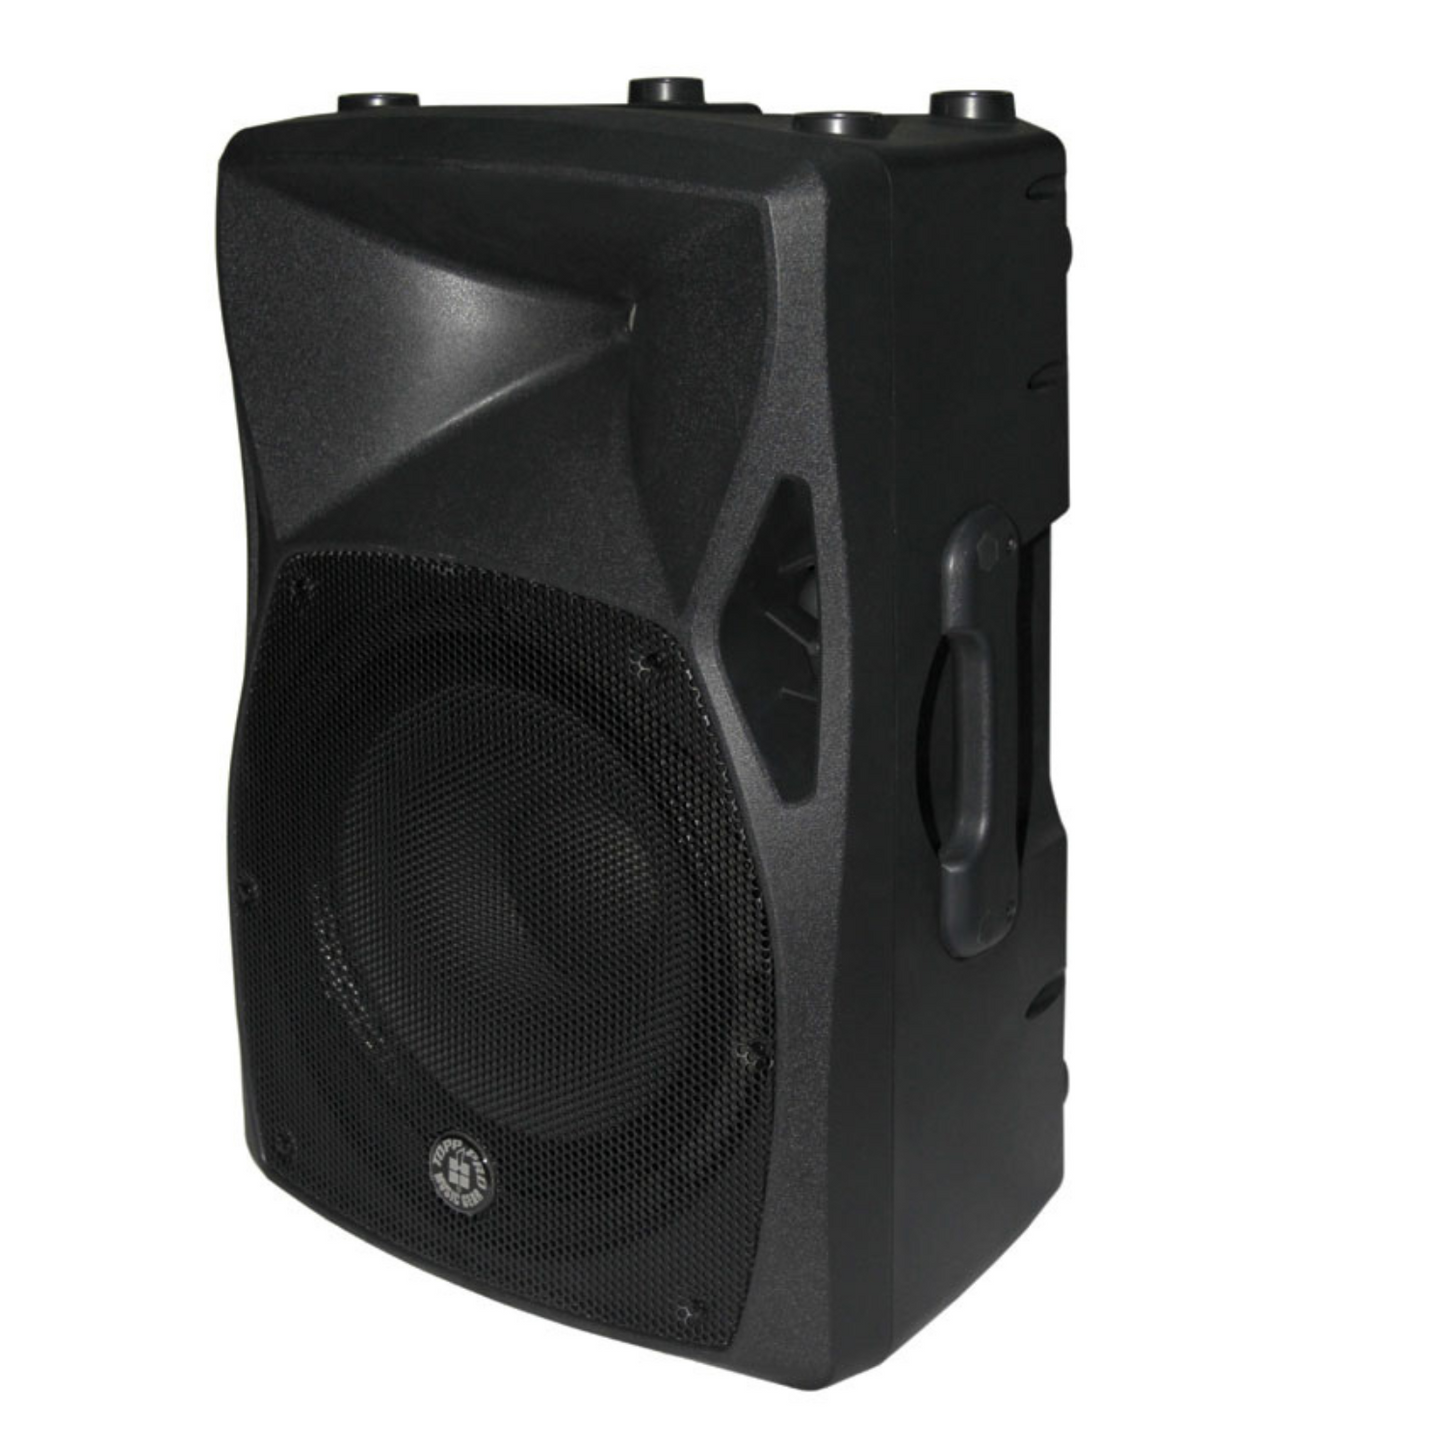 Topp Pro 15" Professional Active Speaker AVANTI-MKII